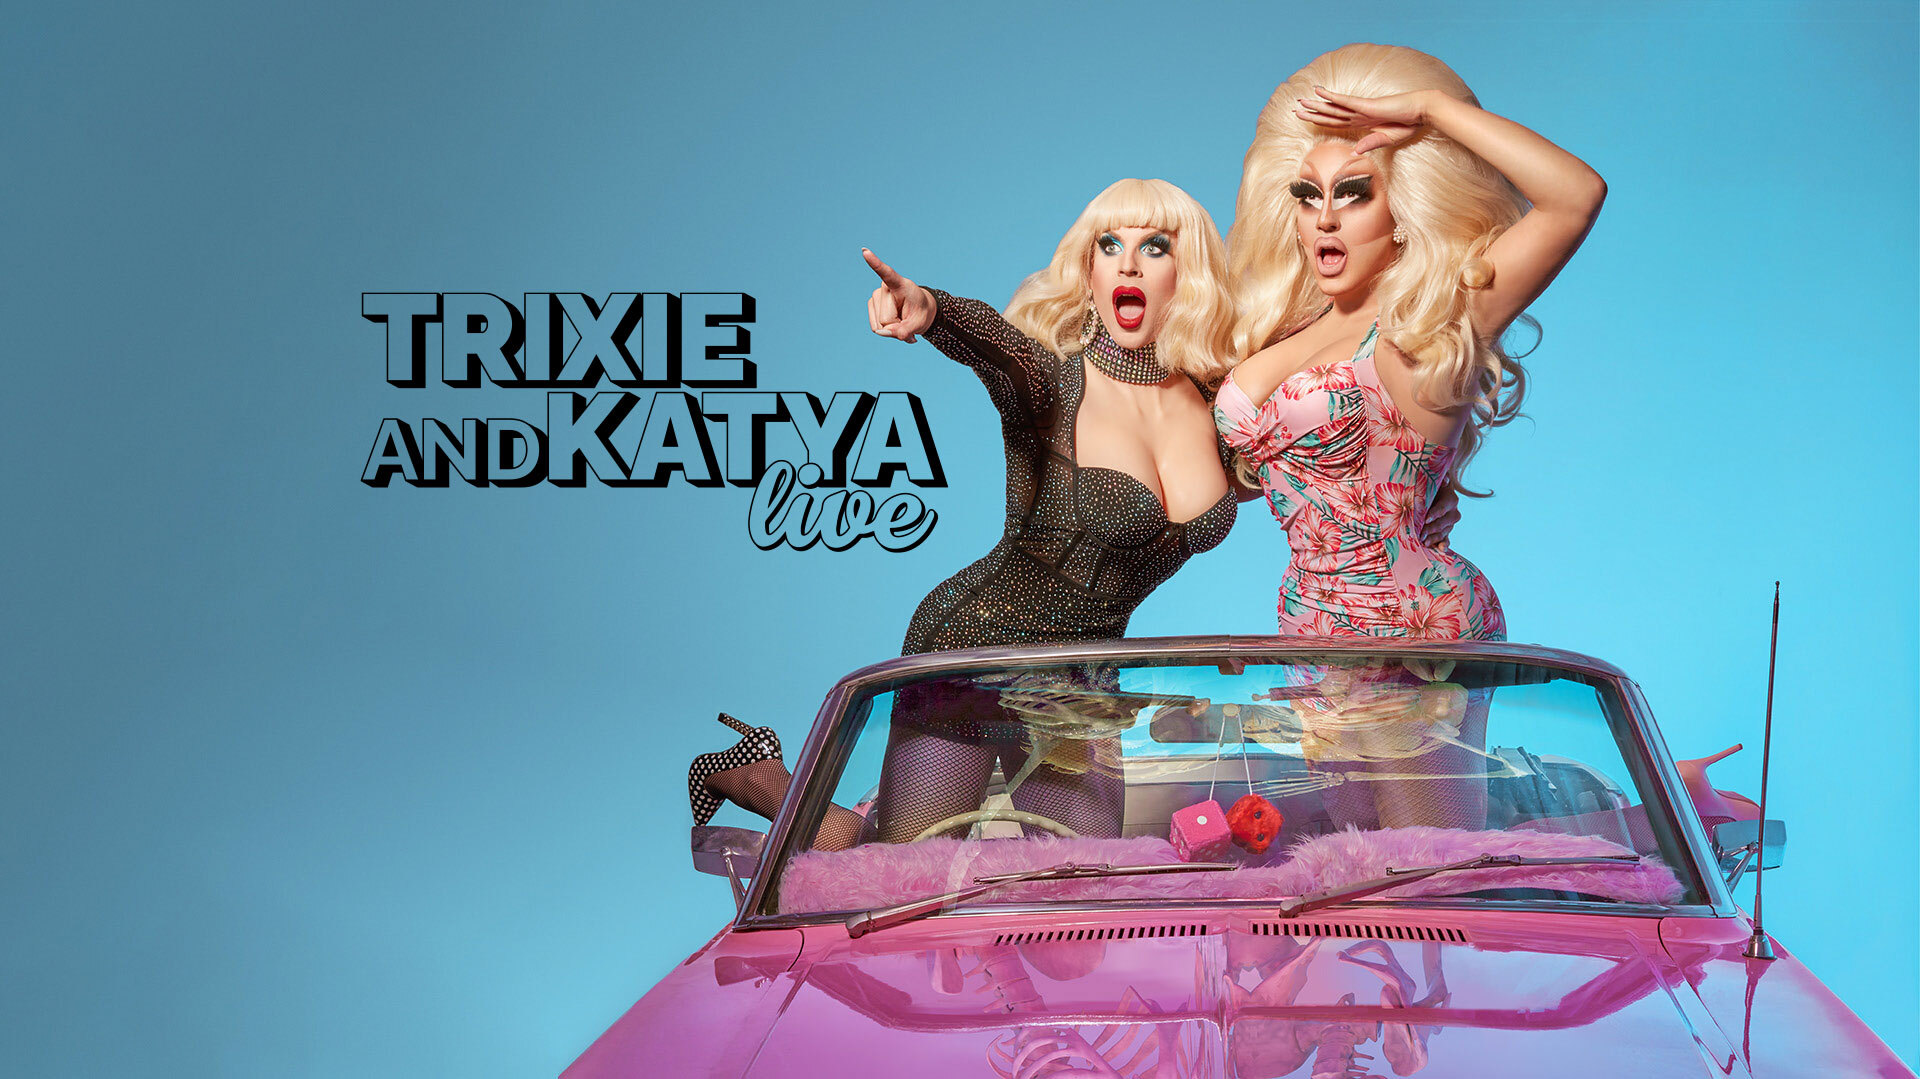 trixie and katya live tour dates